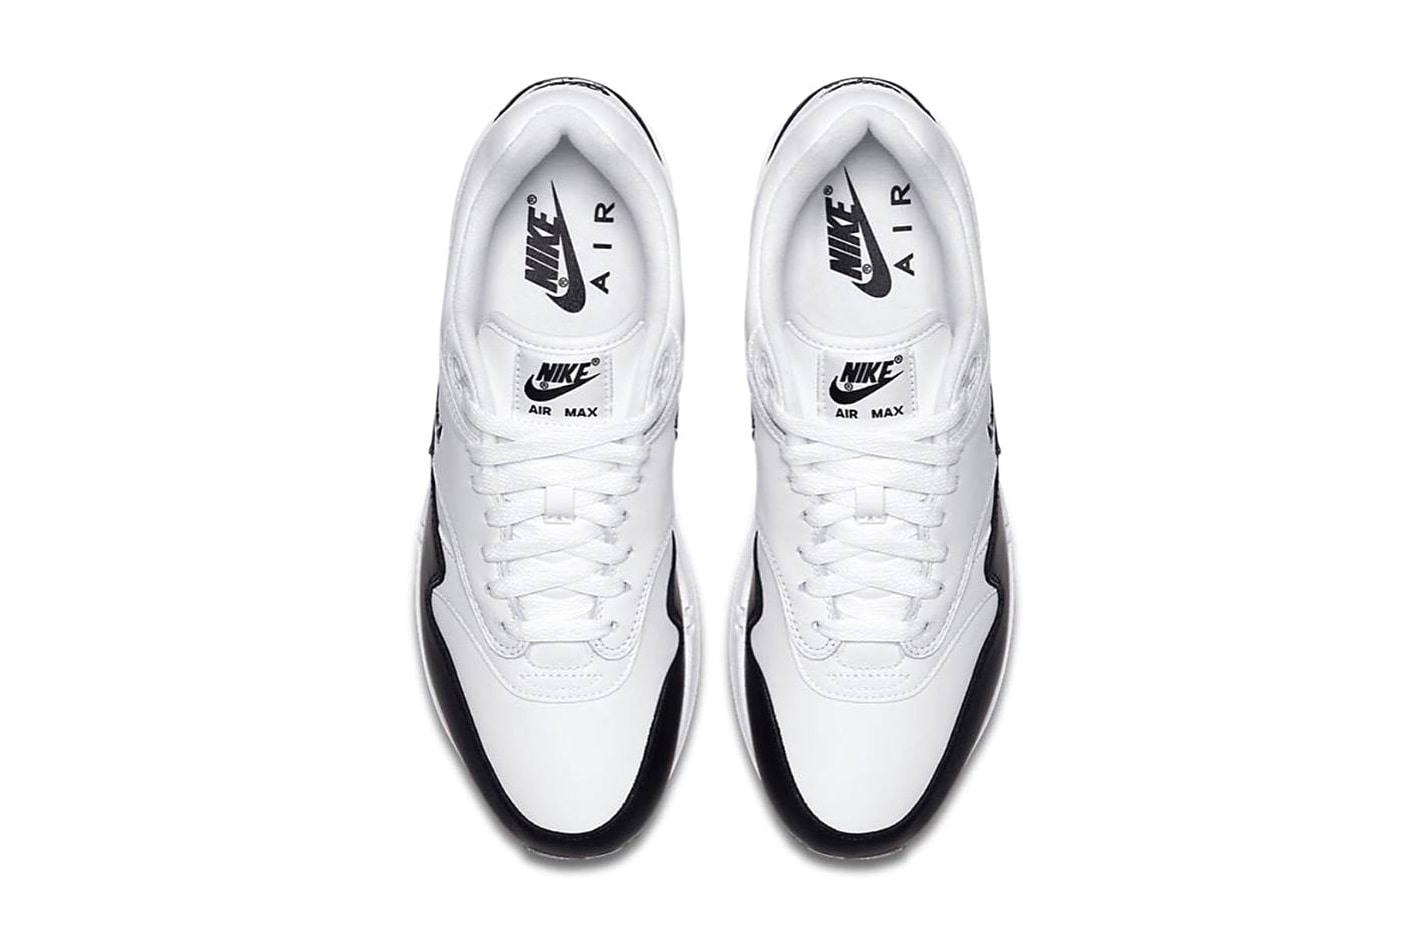 Nike Air Max 1 Premium Jewel "White/Black"